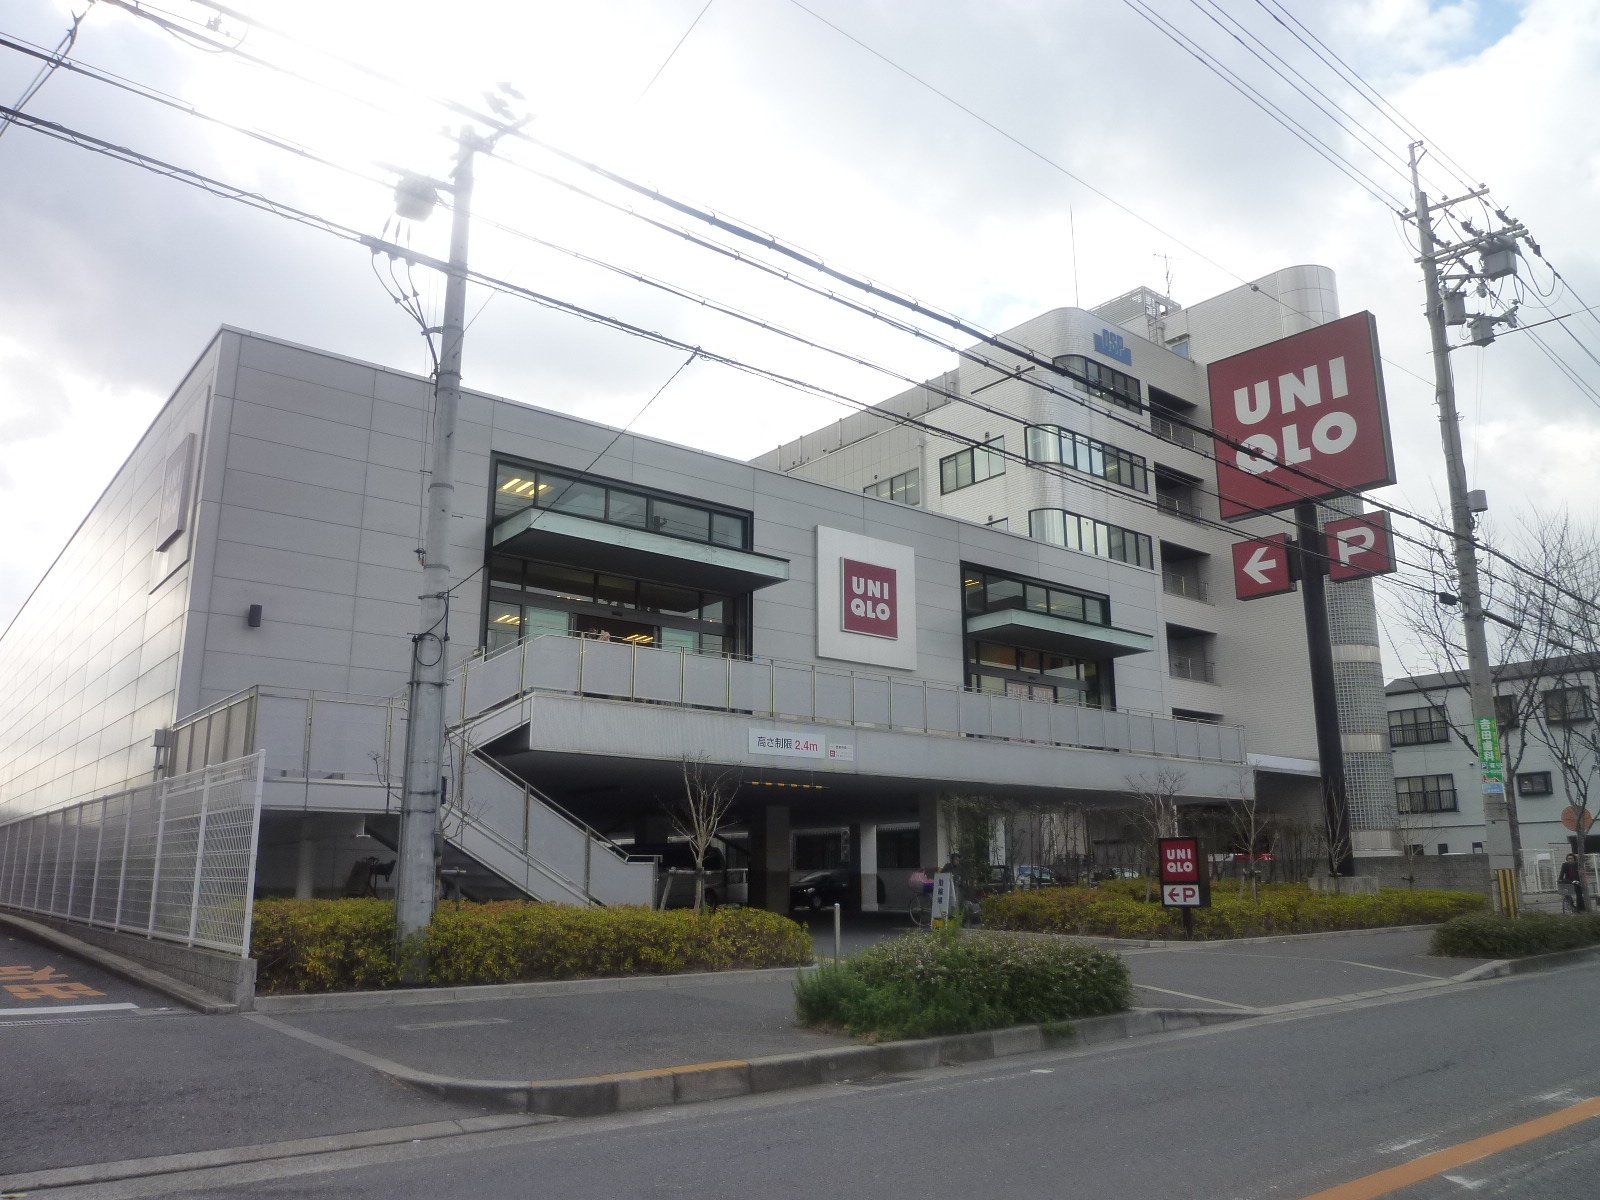 Shopping centre. 632m to UNIQLO Yao Aoyama (shopping center)